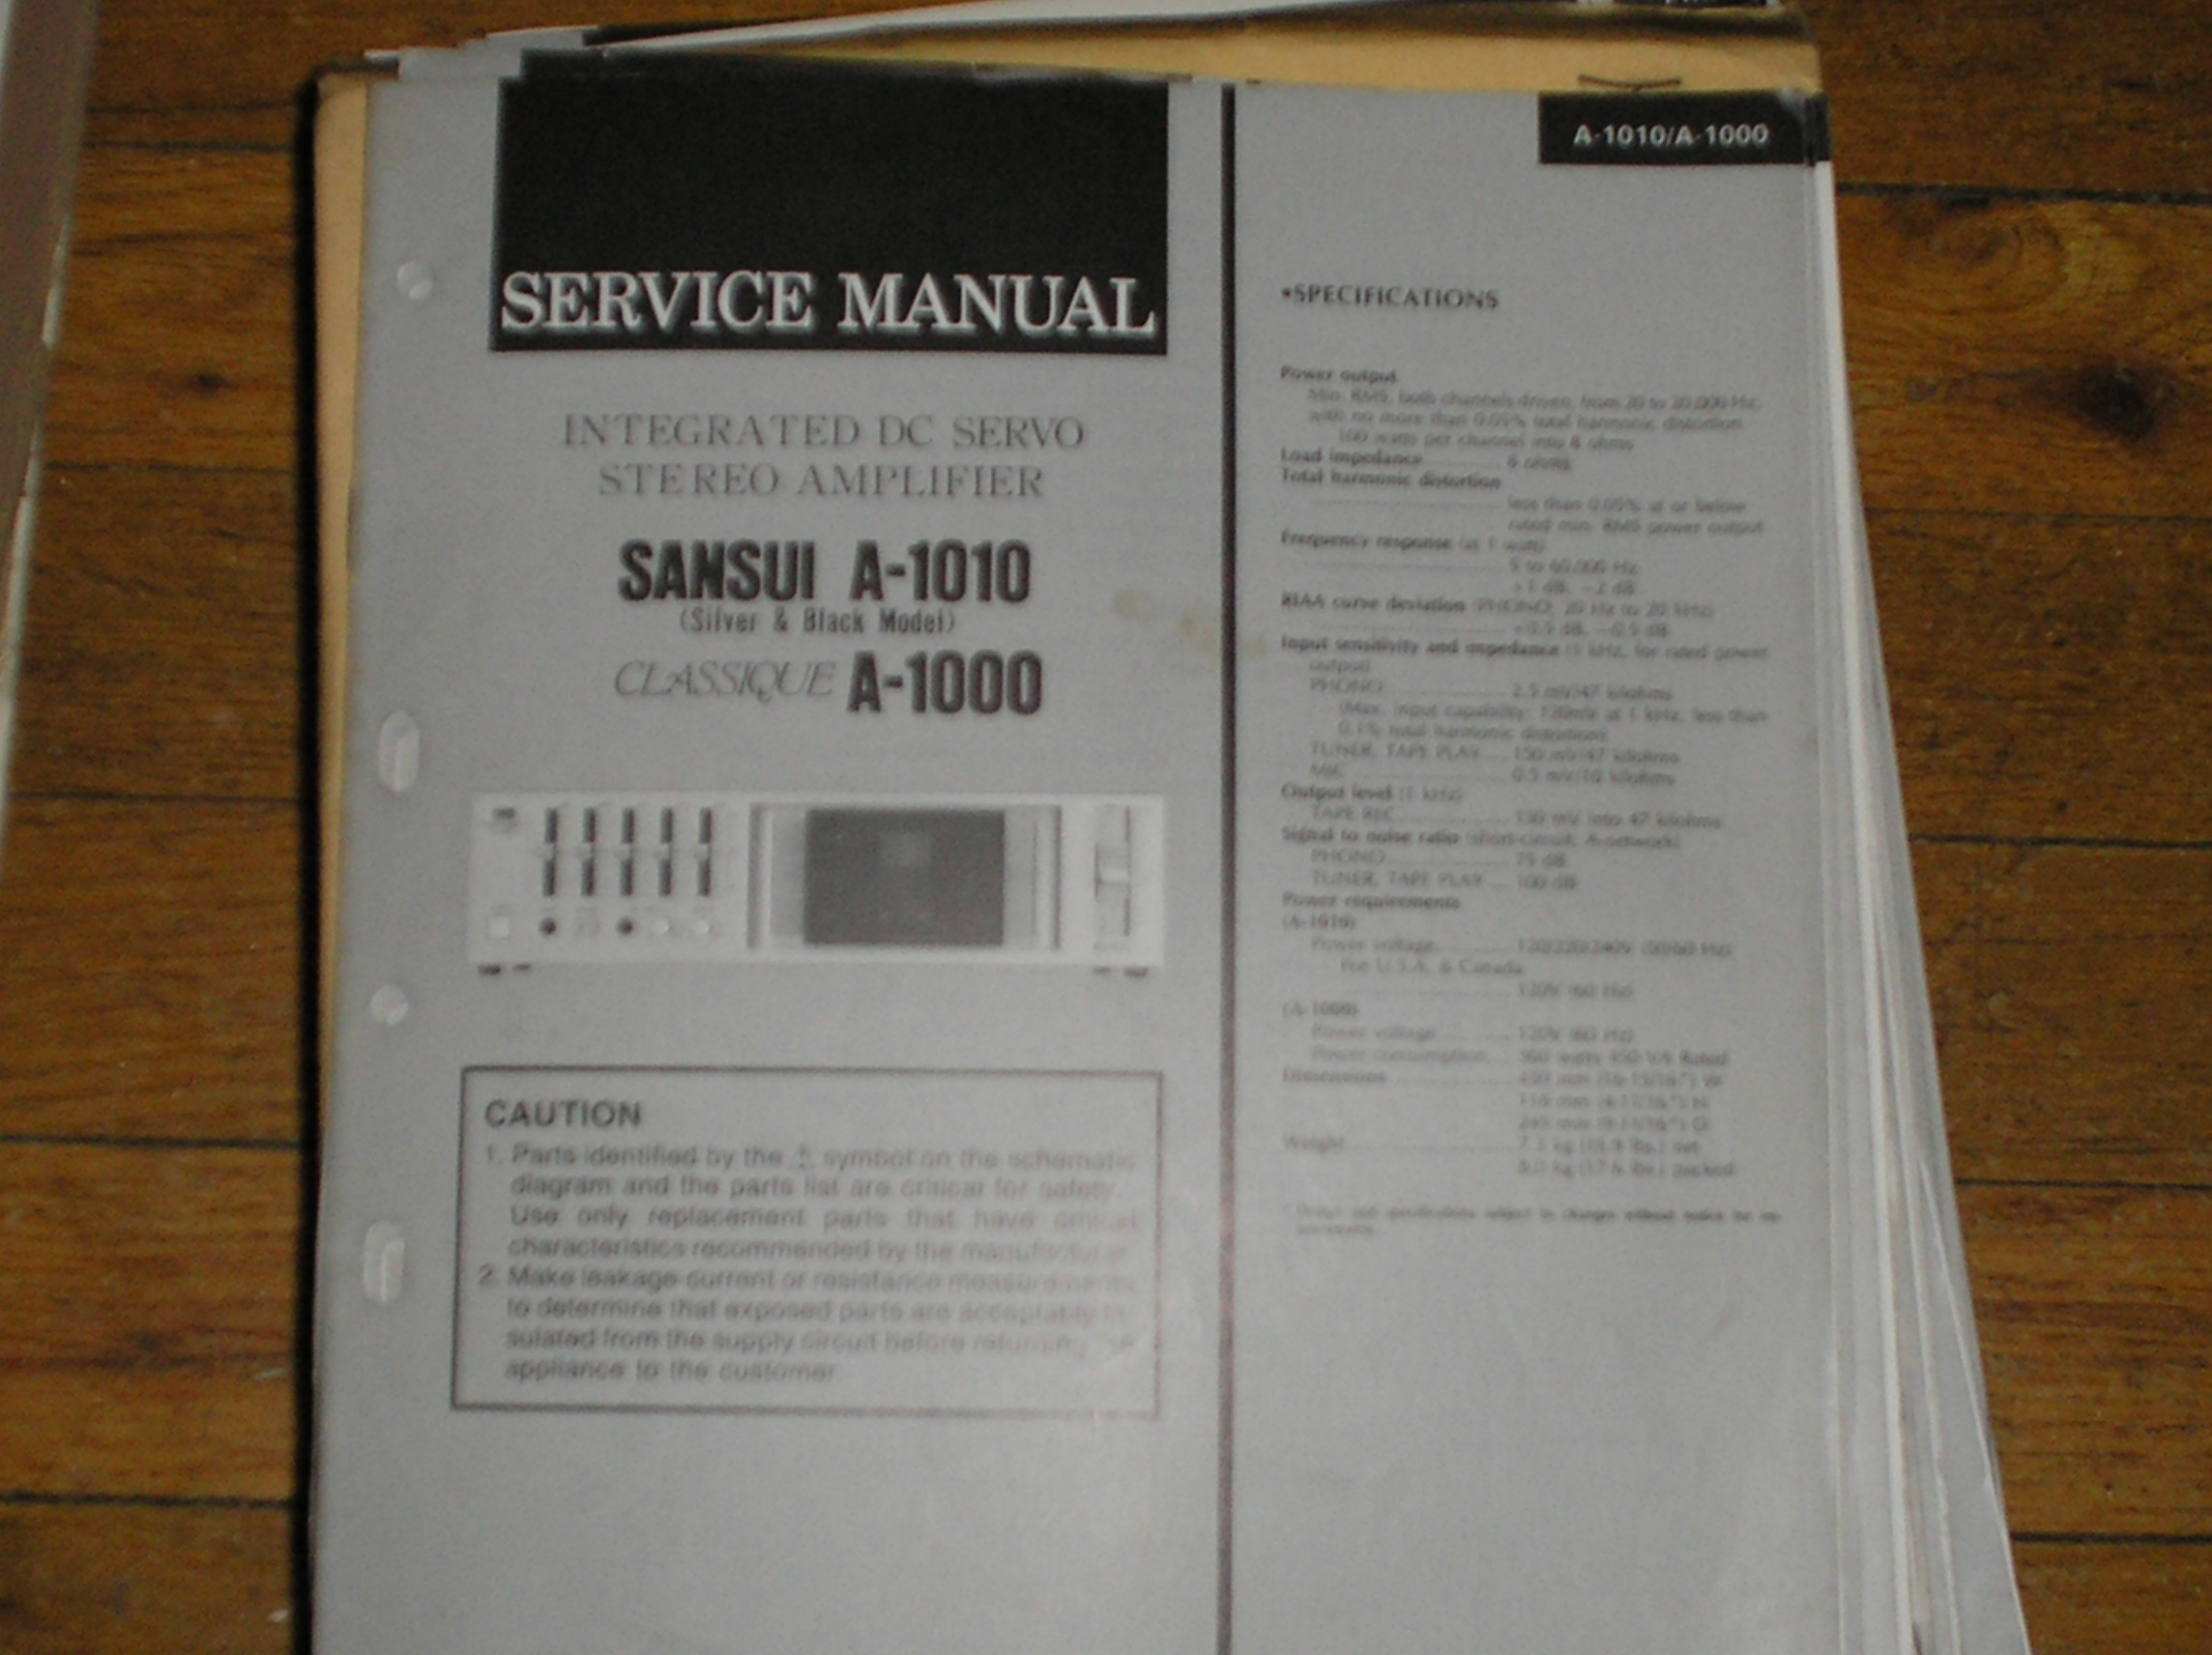 A-1010 A-1000 Classique Amplifier Service Manual